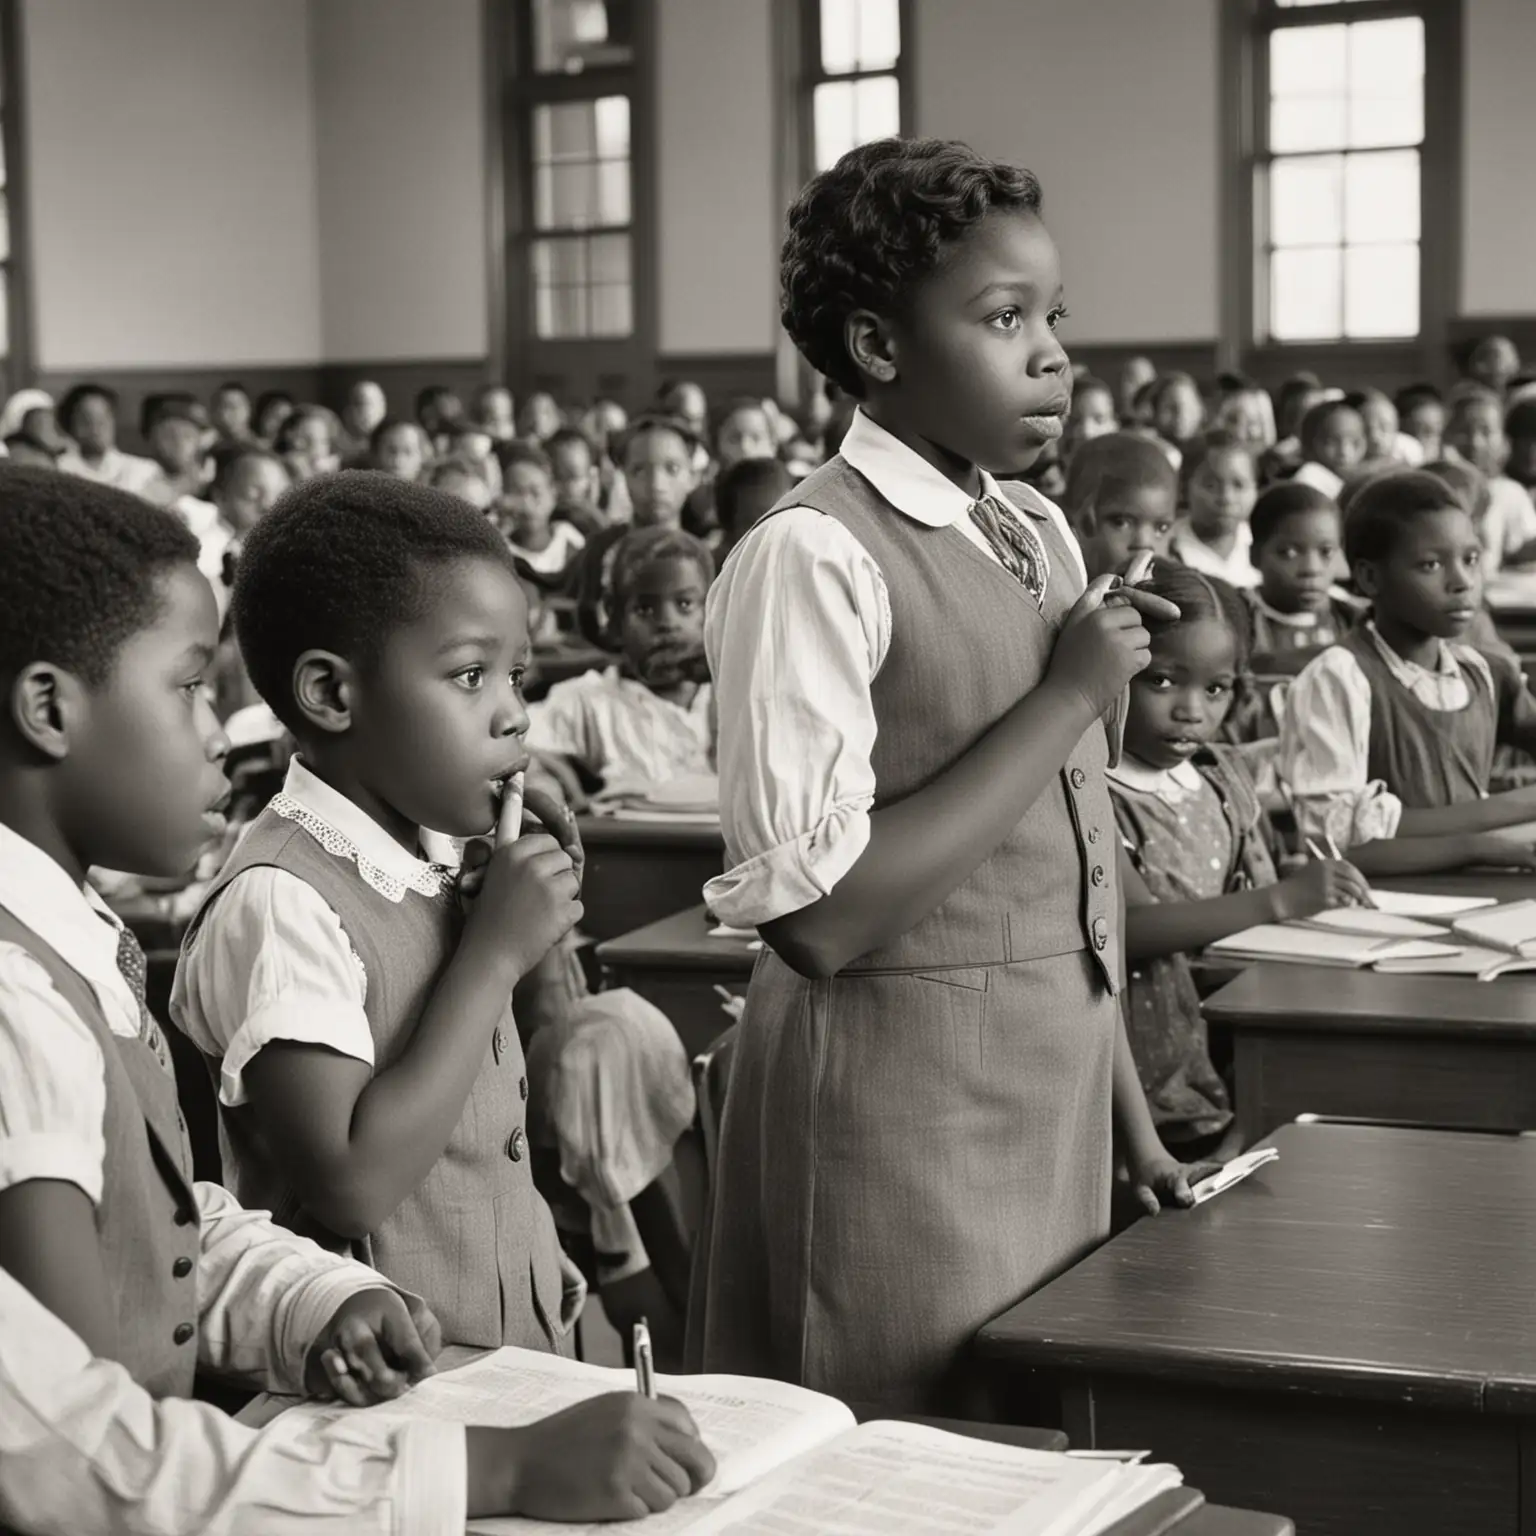 African-American children speaking in front of teachers, and spectators in classroom, 1930